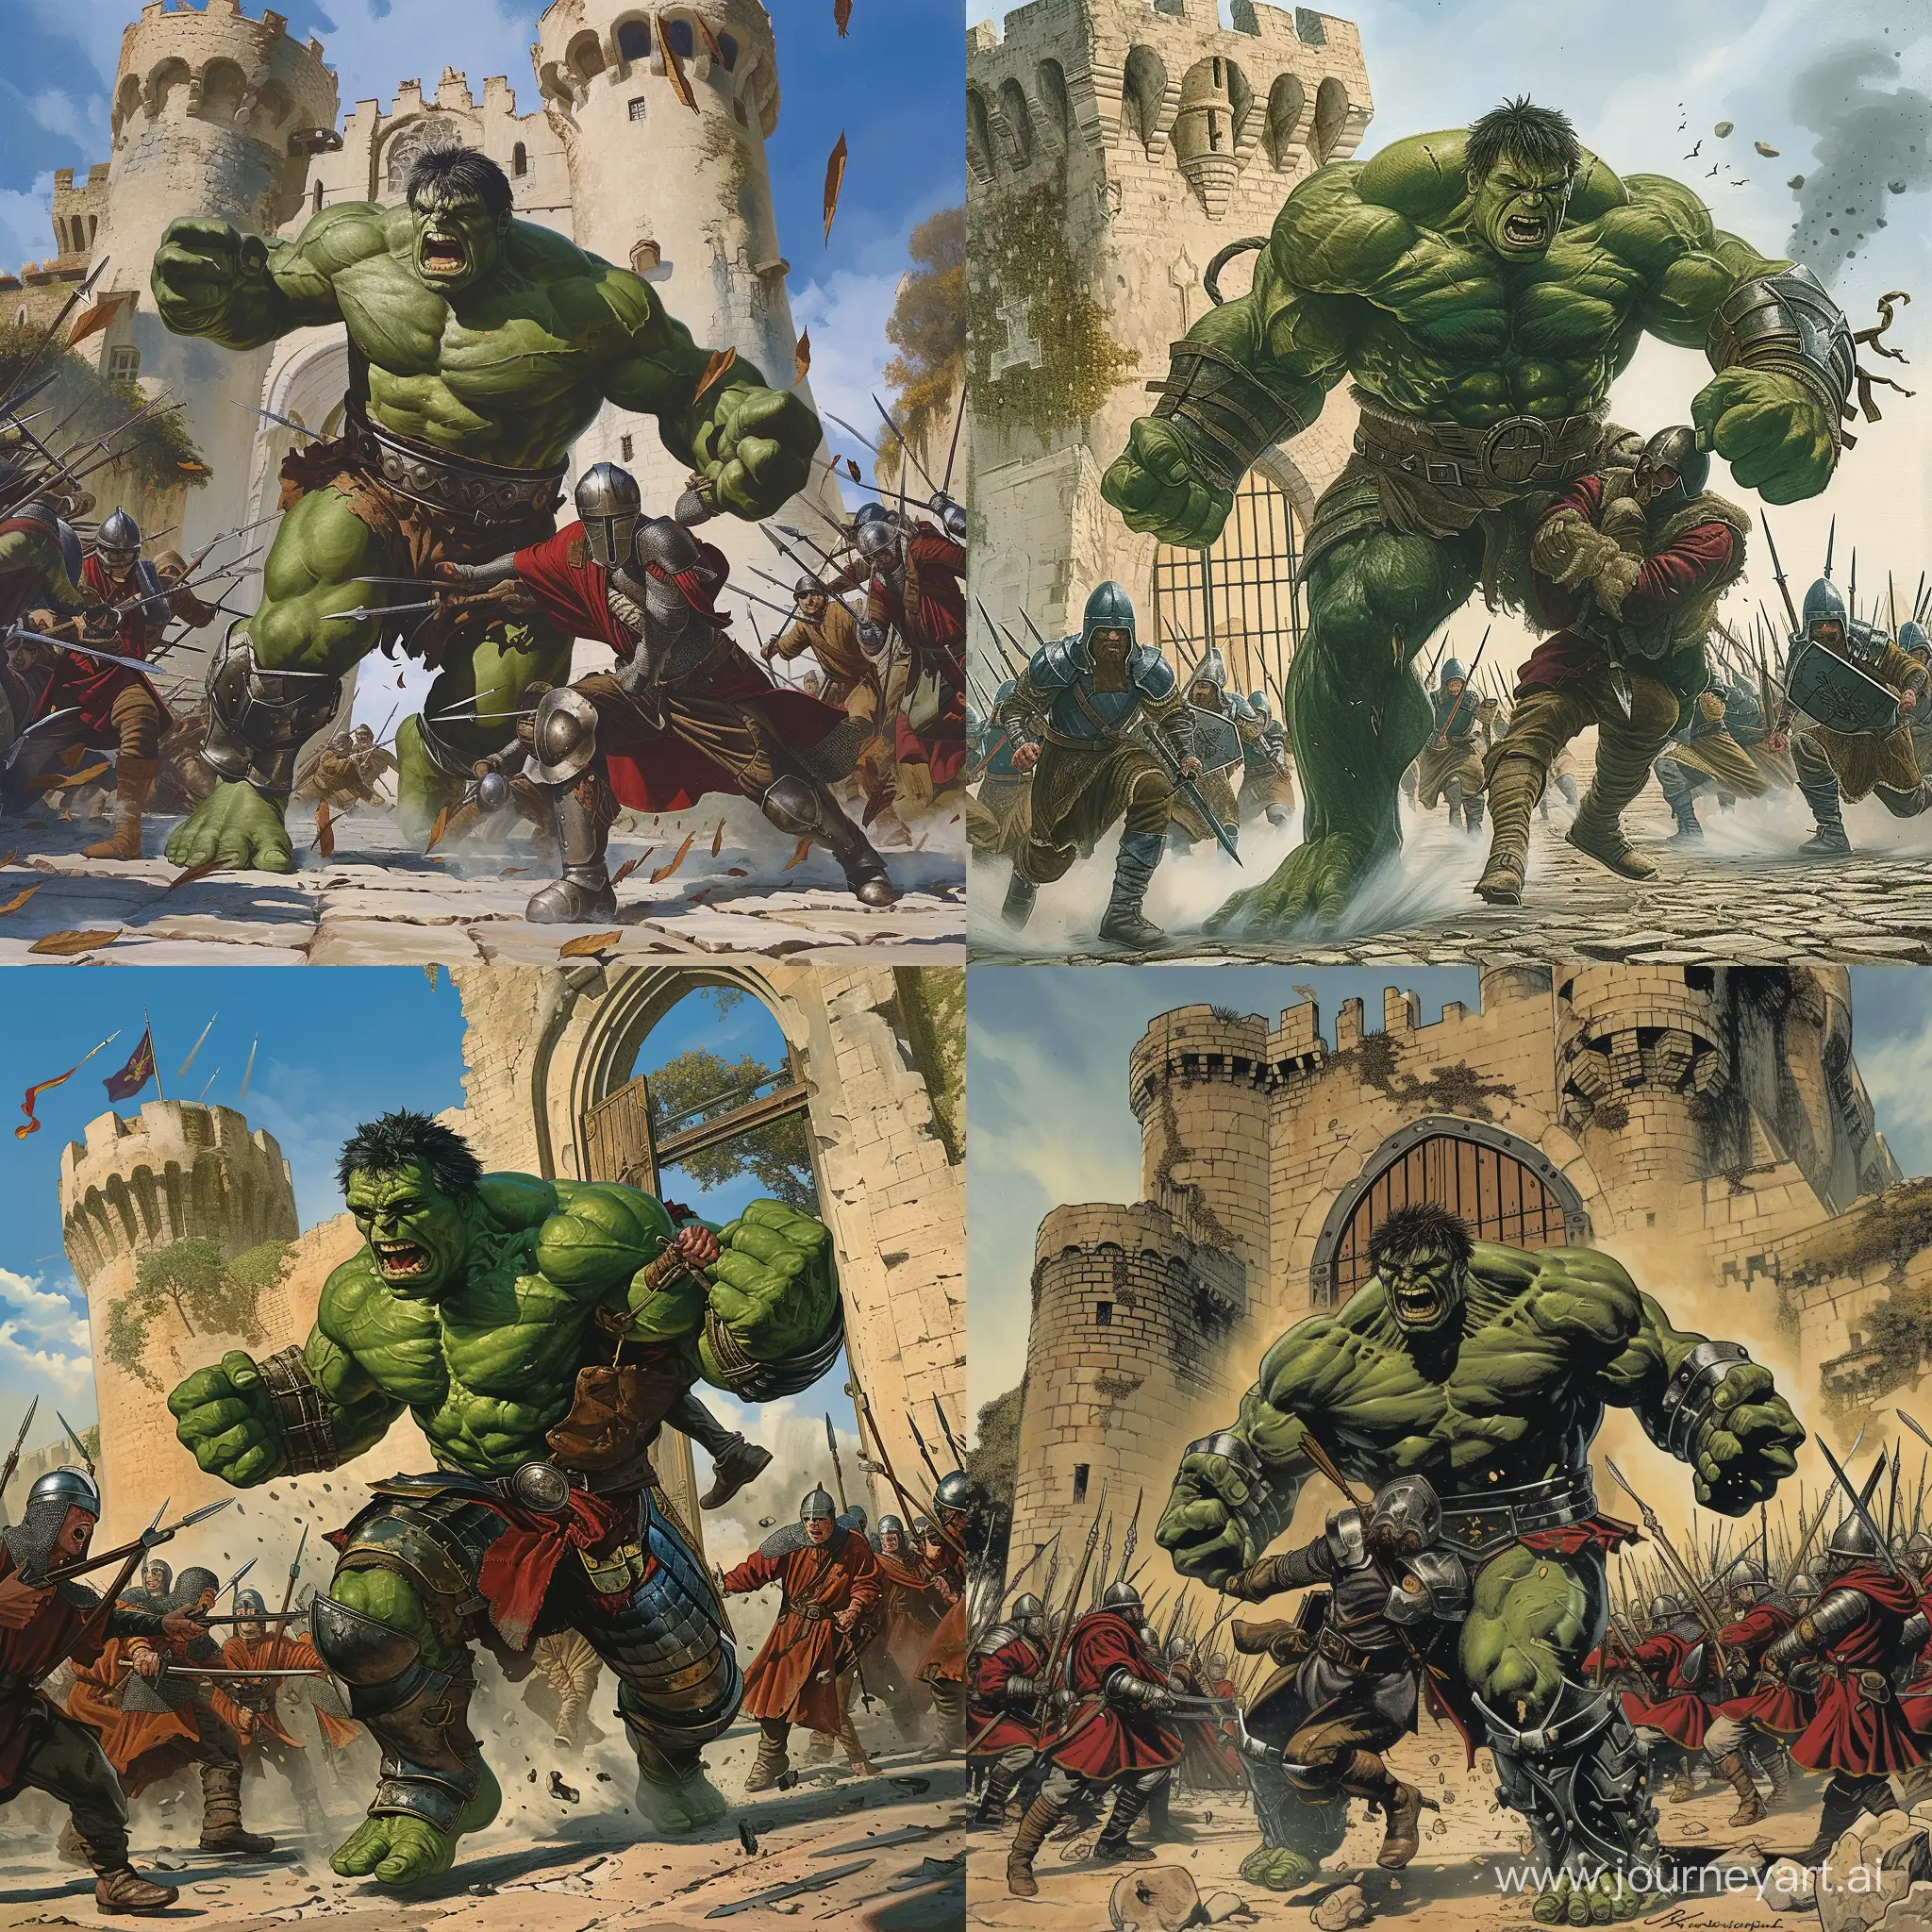 Hulk-Battles-Medieval-Soldiers-at-Castle-Gate